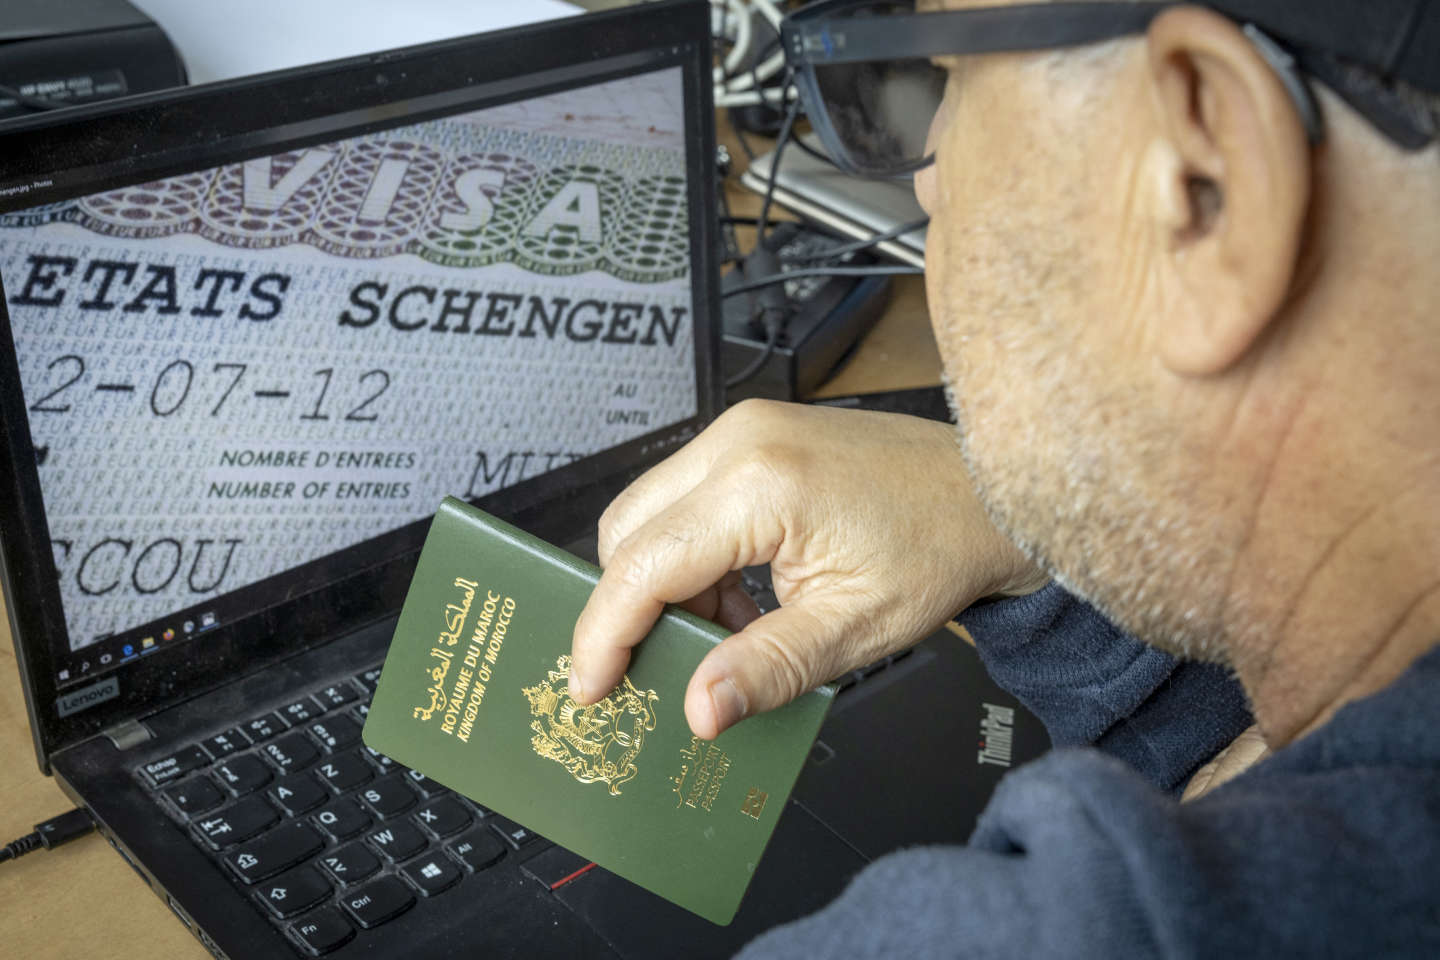 Faux Visas Schengen